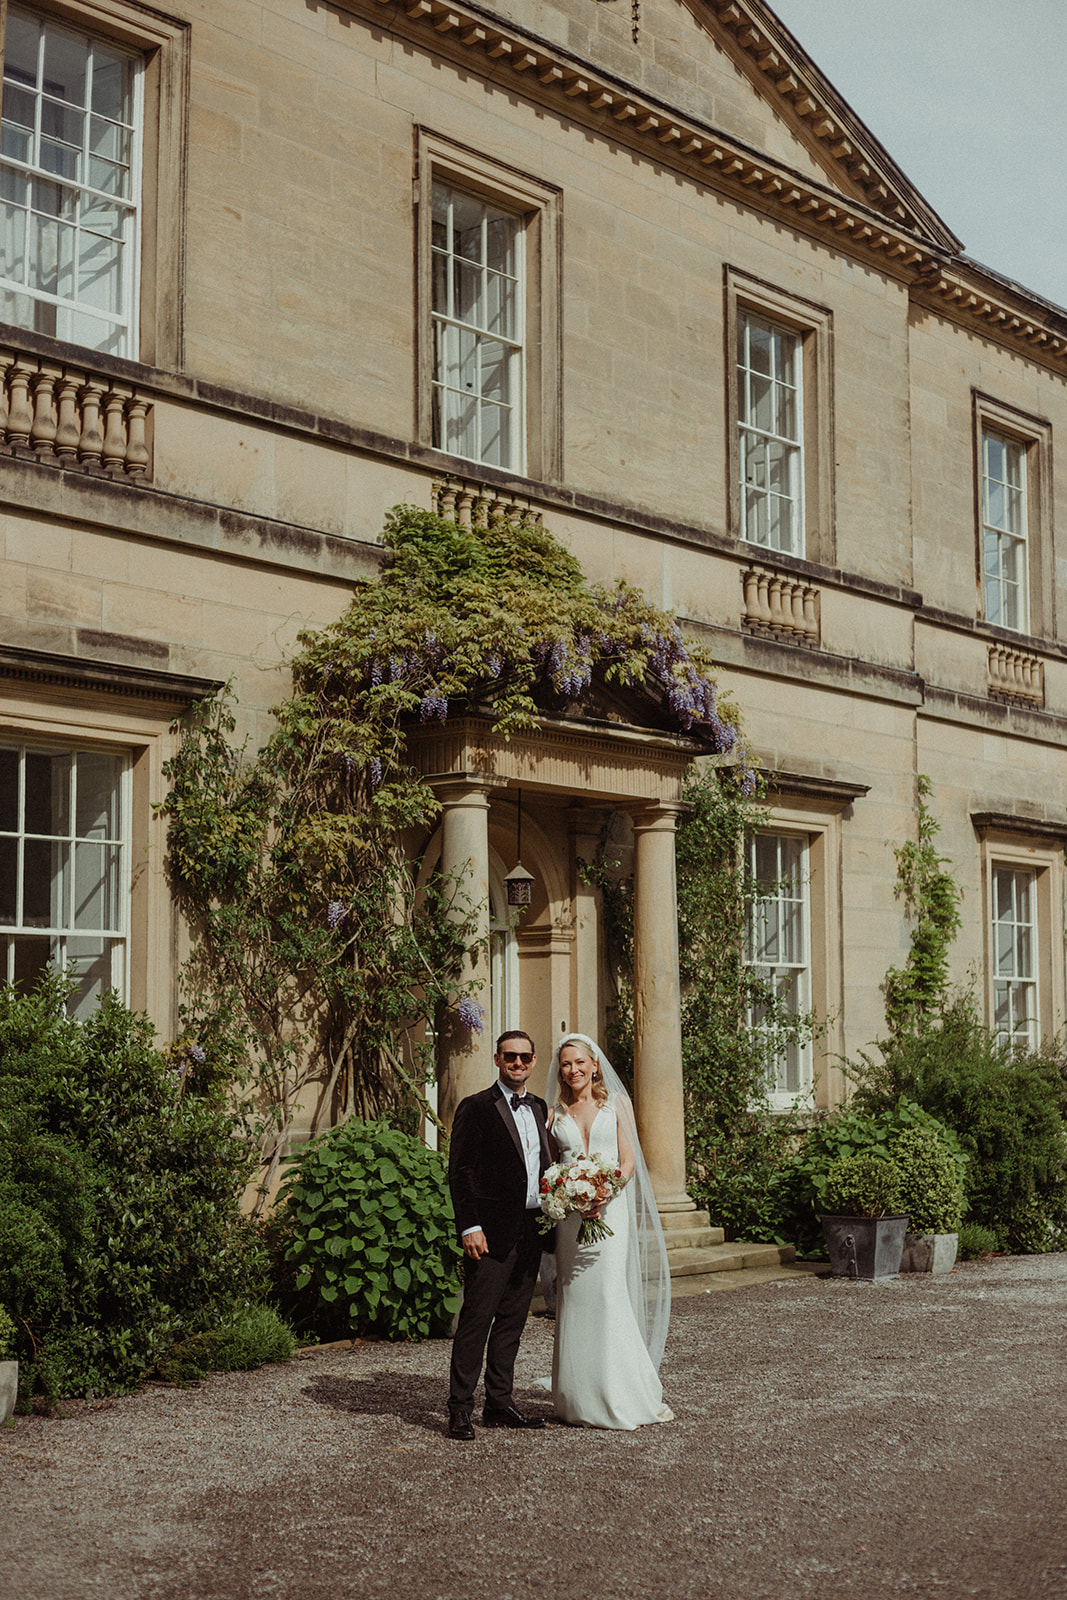 Hayley & Steven | Middleton Lodge Wedding | Leica Q